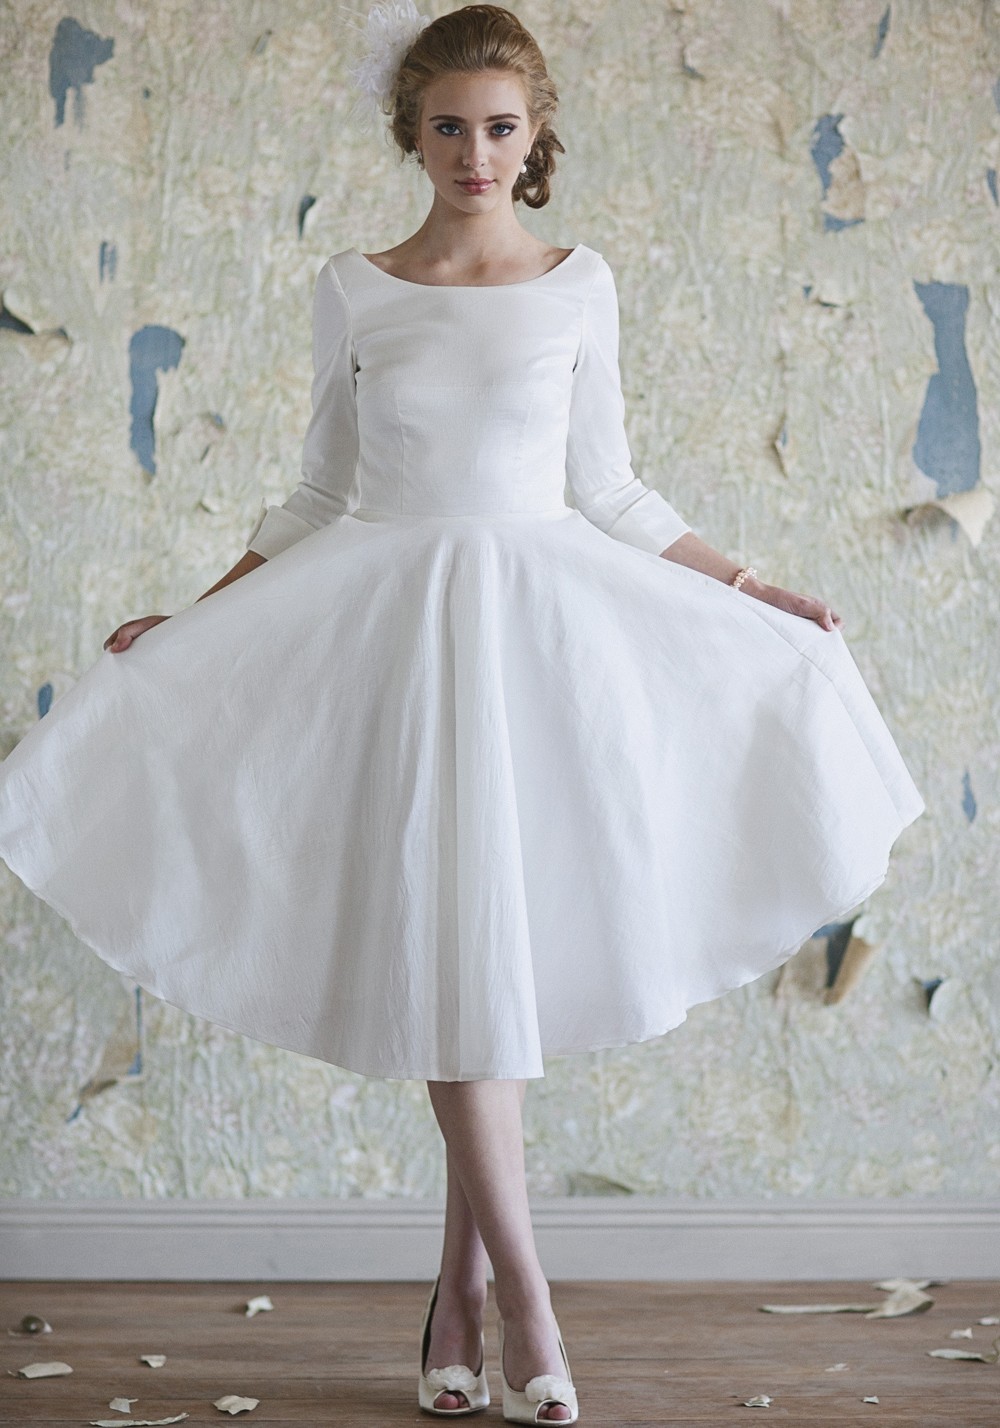 27 Inspiring Ideas of Tea Length Wedding Dresses | The Best Wedding Dresses